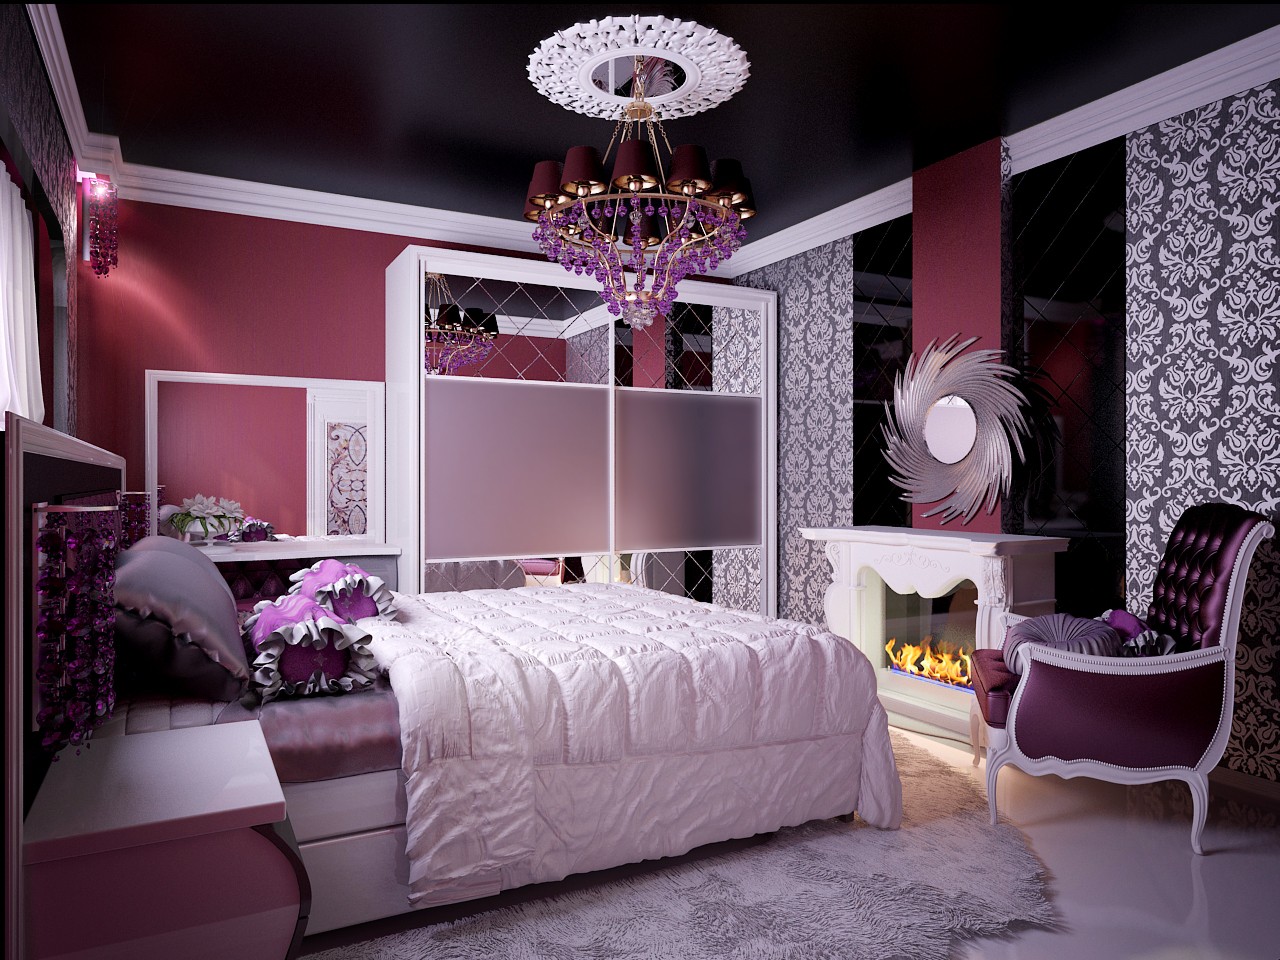 Fashionable Bedroom Decorating Ideas